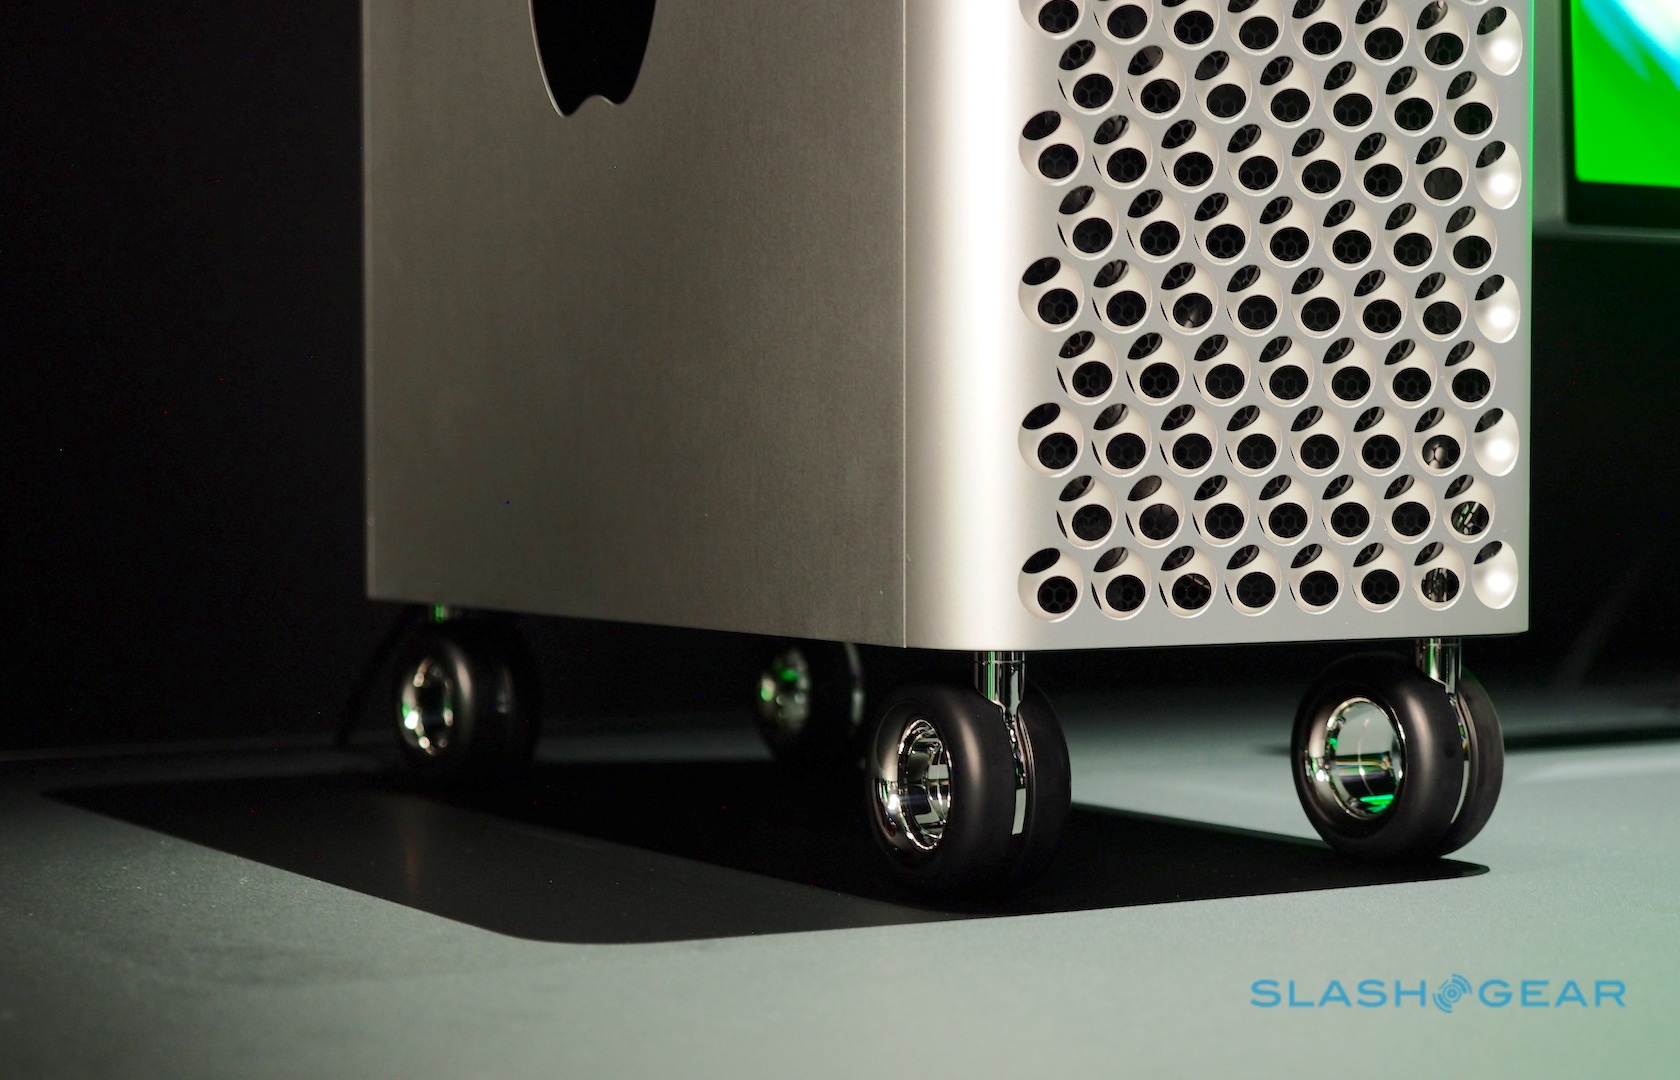 Download The Mac Pro Wheels Cost 400 Slashgear